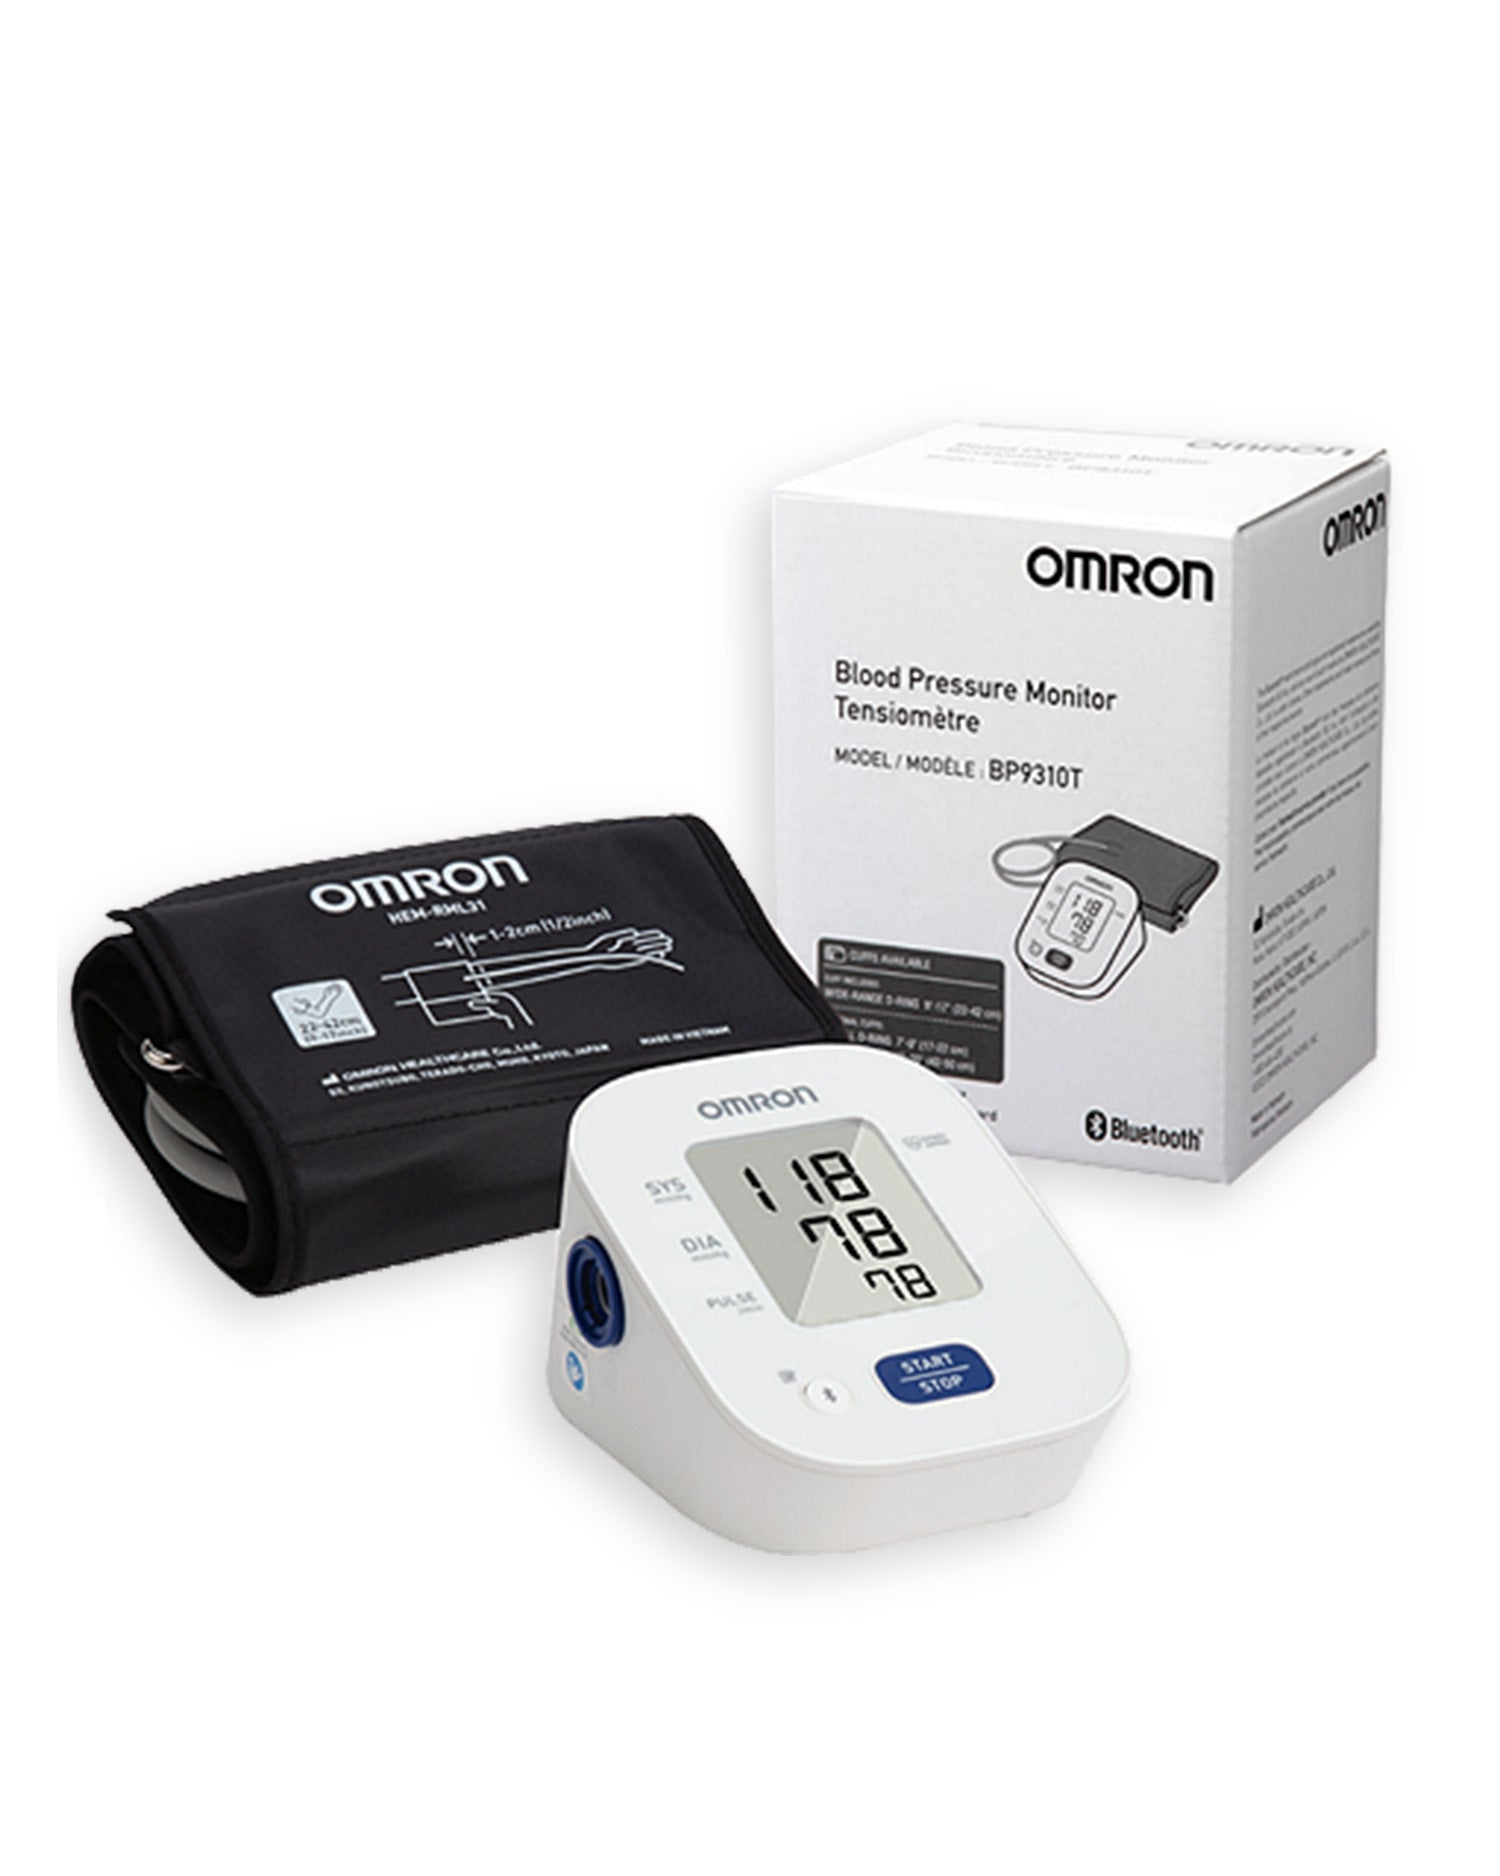 Omron 5 Series Wireless Upper Arm Blood Pressure Monitor (BP7250)